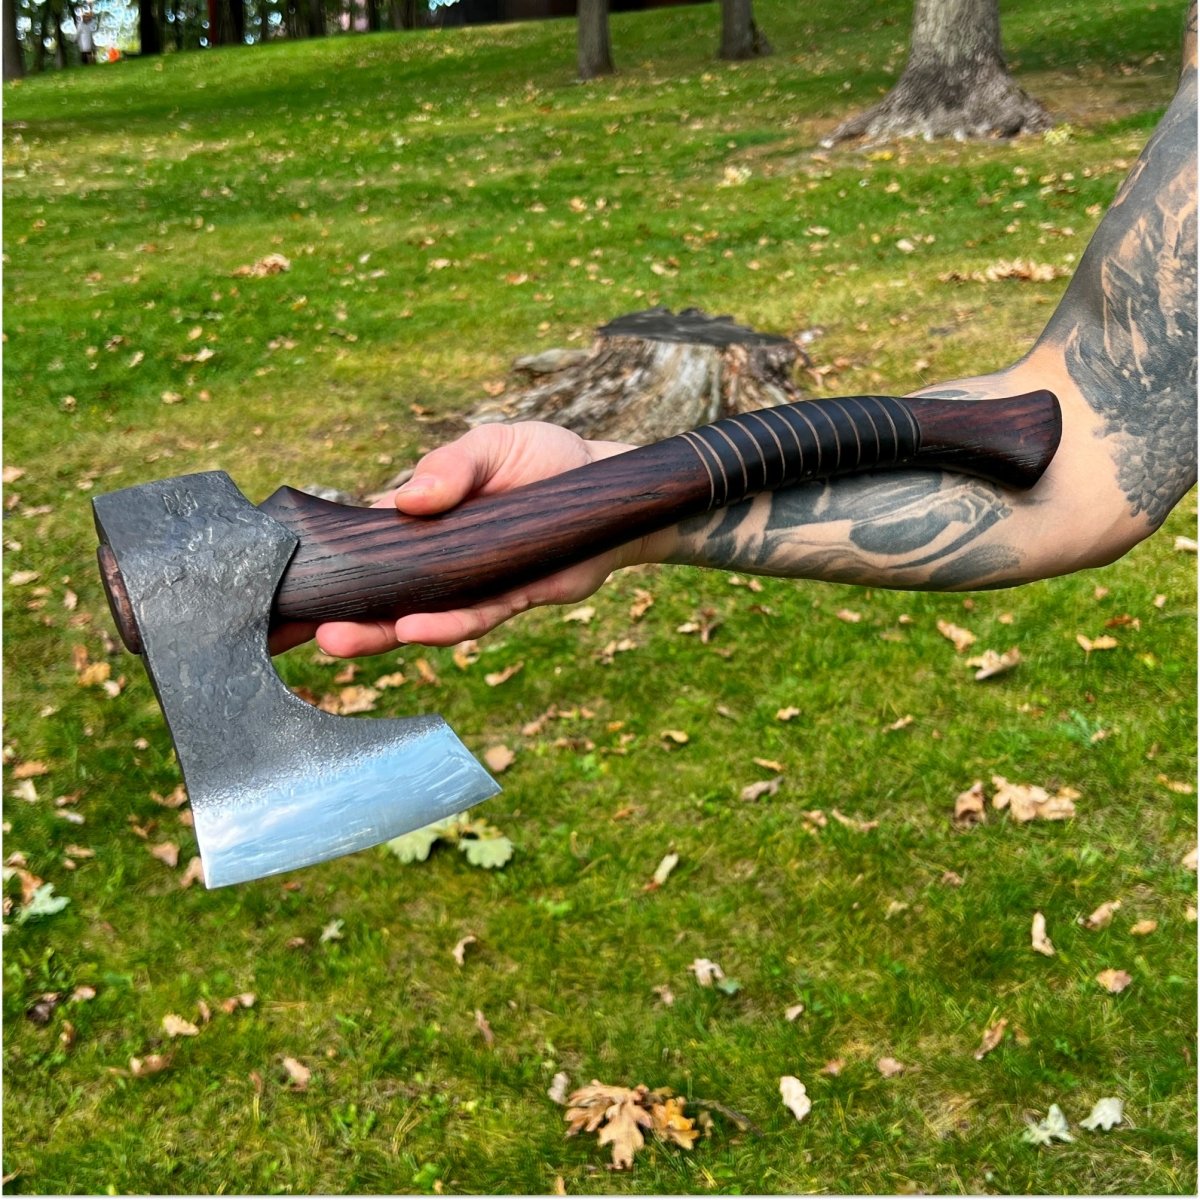 Viking handmade hatchet “Balder” from AncientSmithy